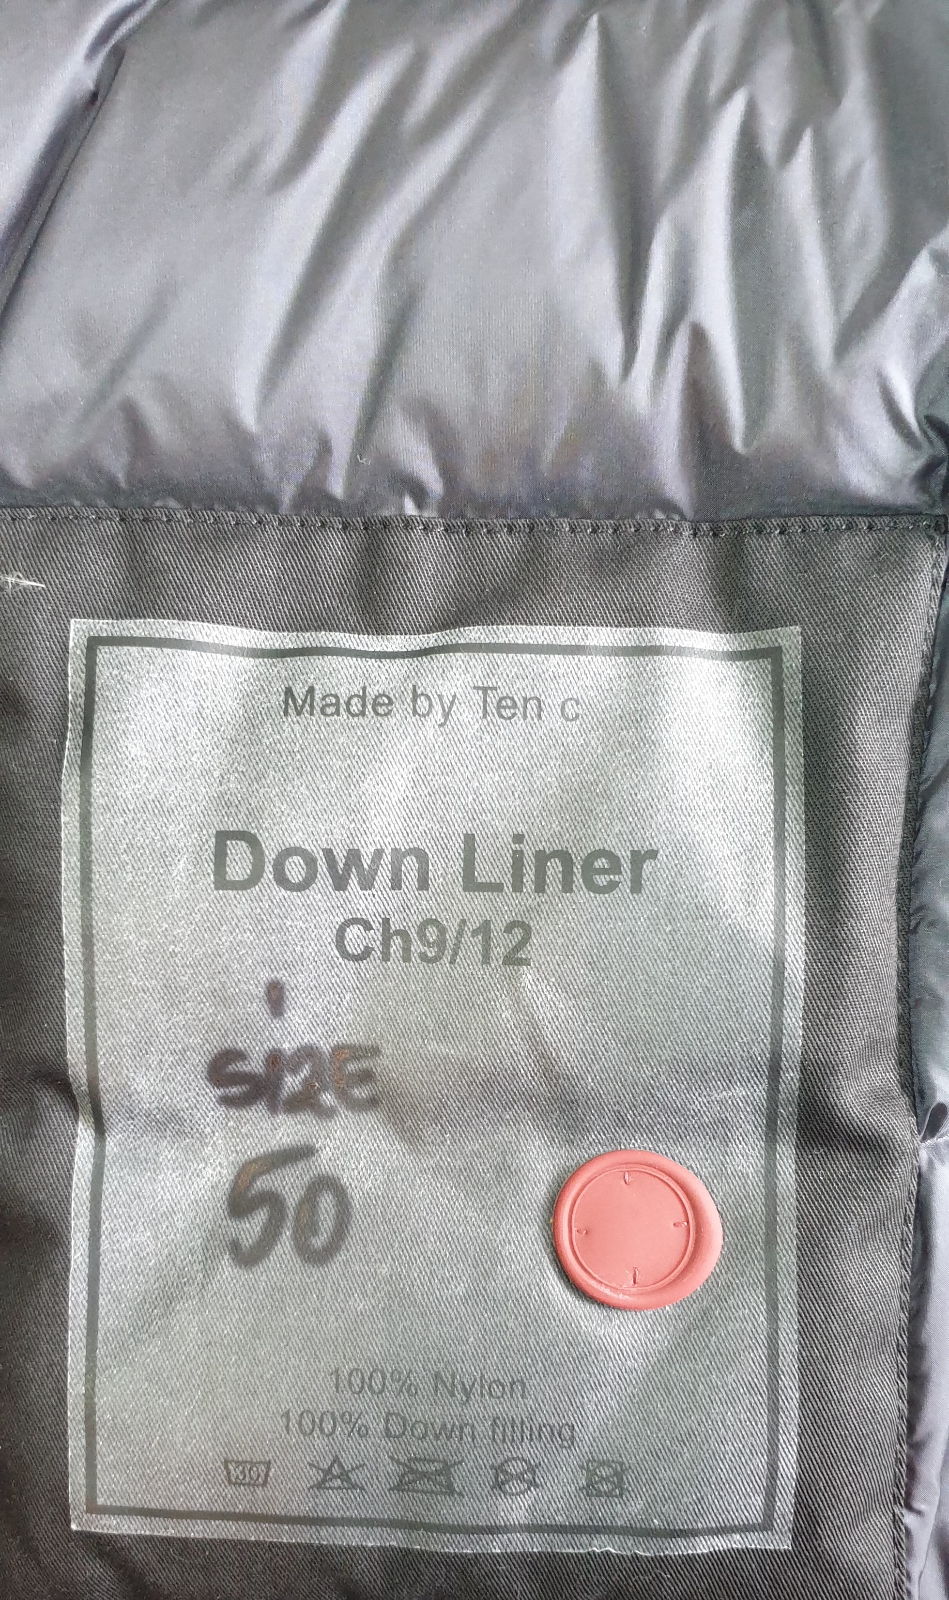 Down liner Jacket - 6